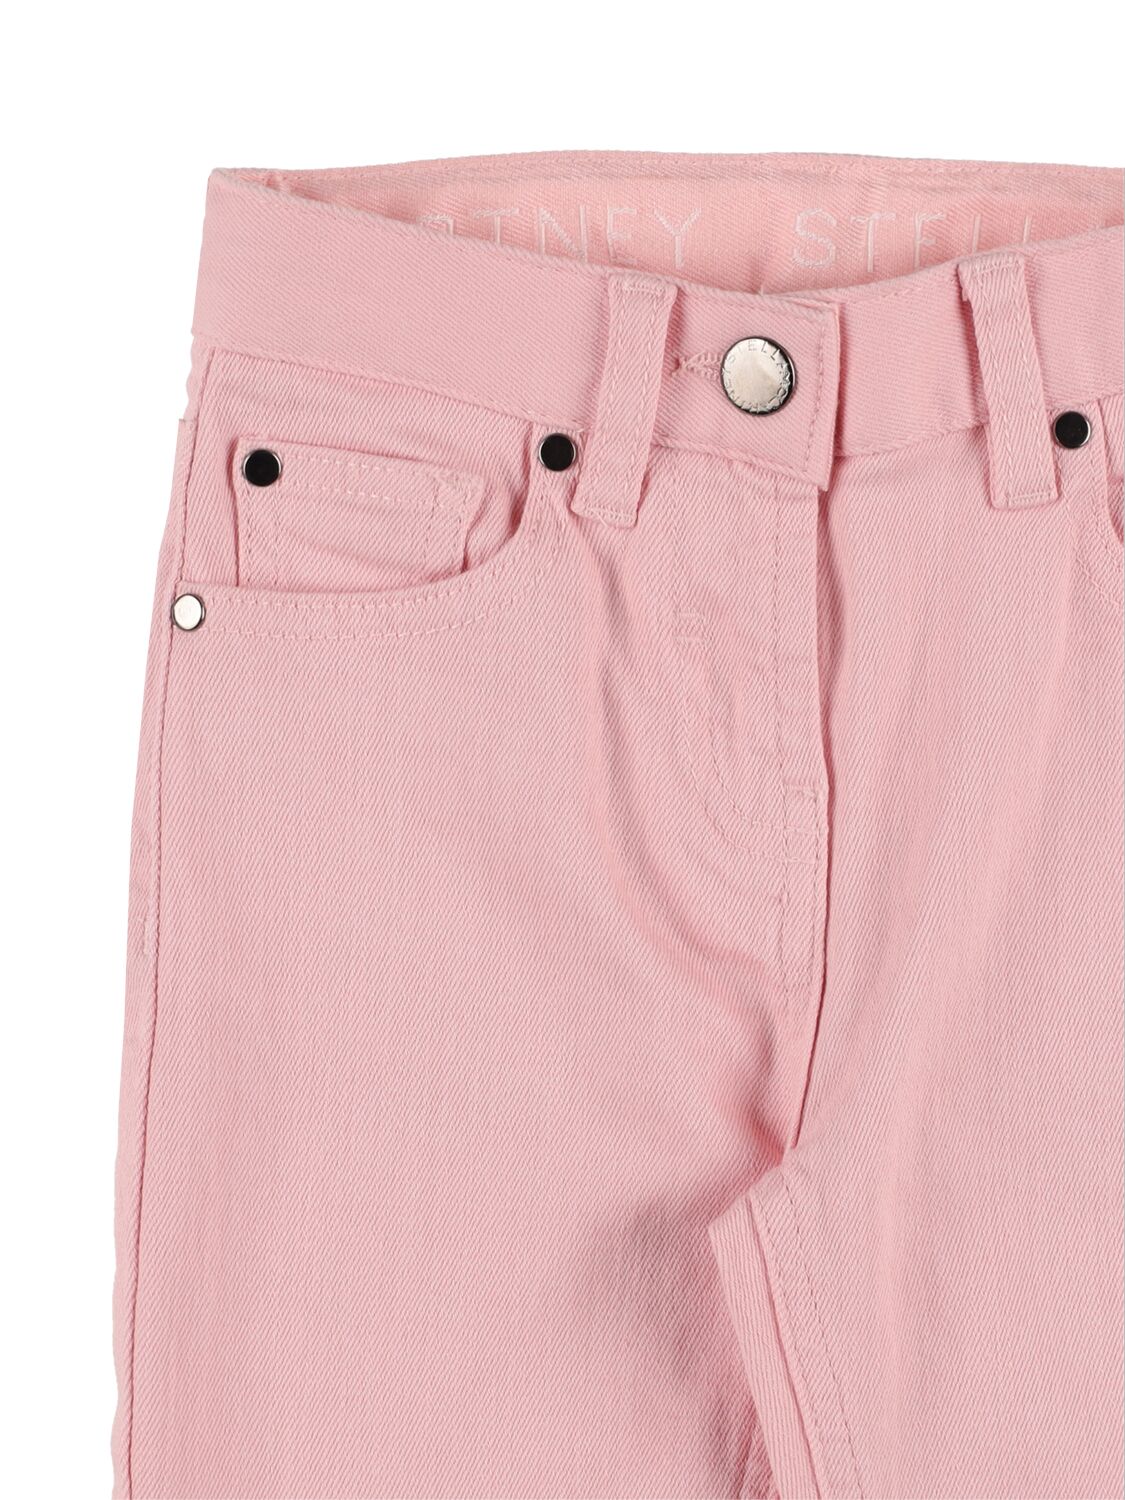 Shop Stella Mccartney Stretch Organic Cotton Blend Jeans In Pink